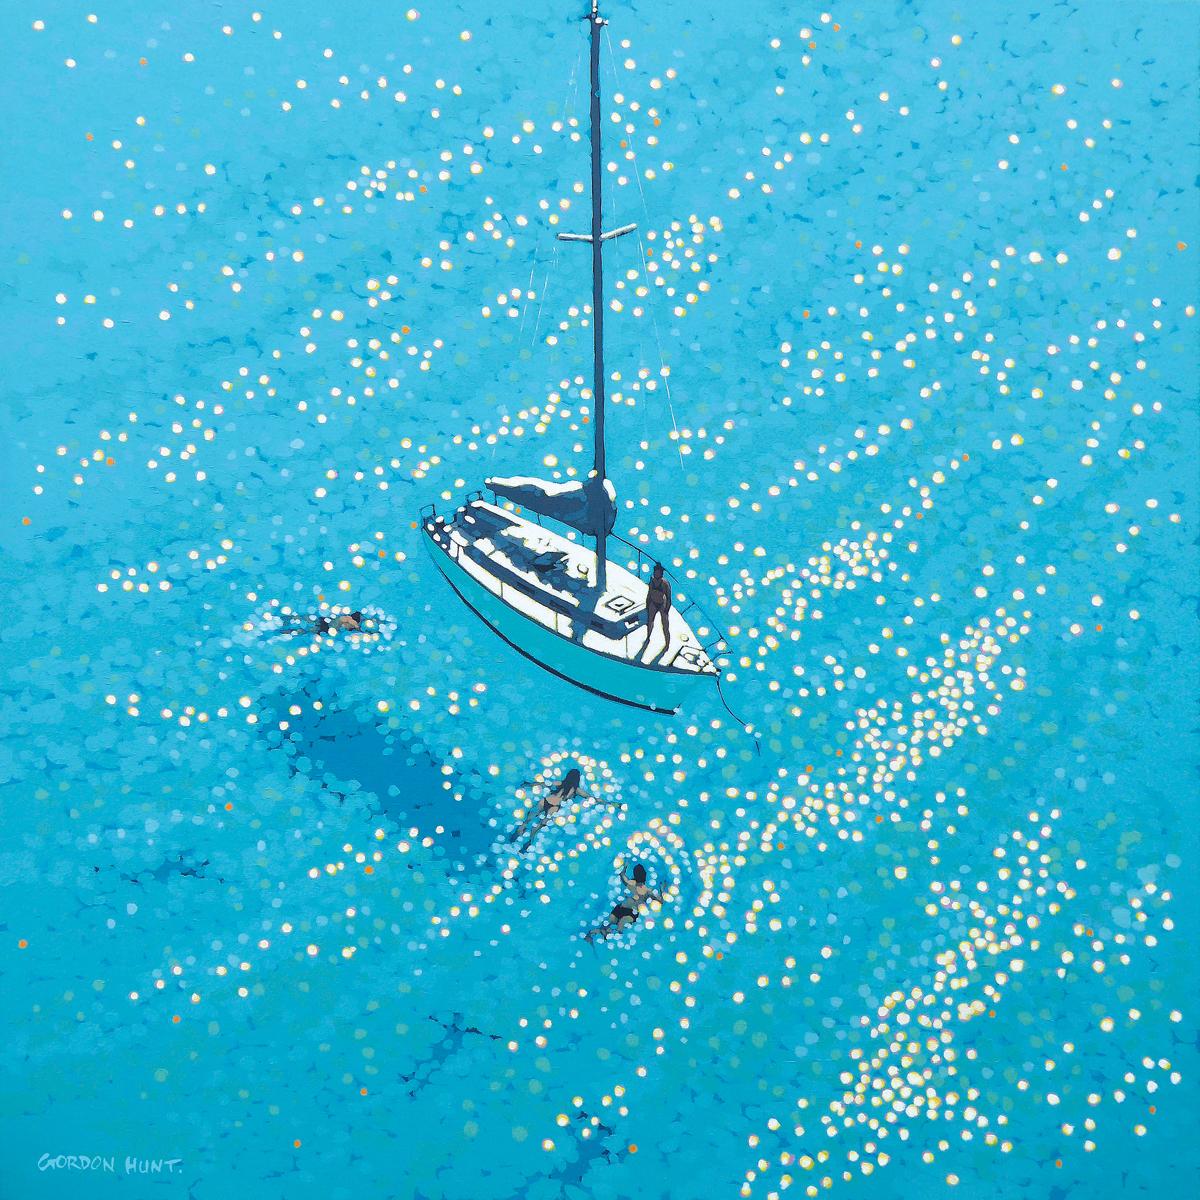 Gordon Hunt Figurative Print - Swim Stop (Image 60 x 60, Sheet: 70 x 70cm), Art Print, Seascape, Blue, Sailing